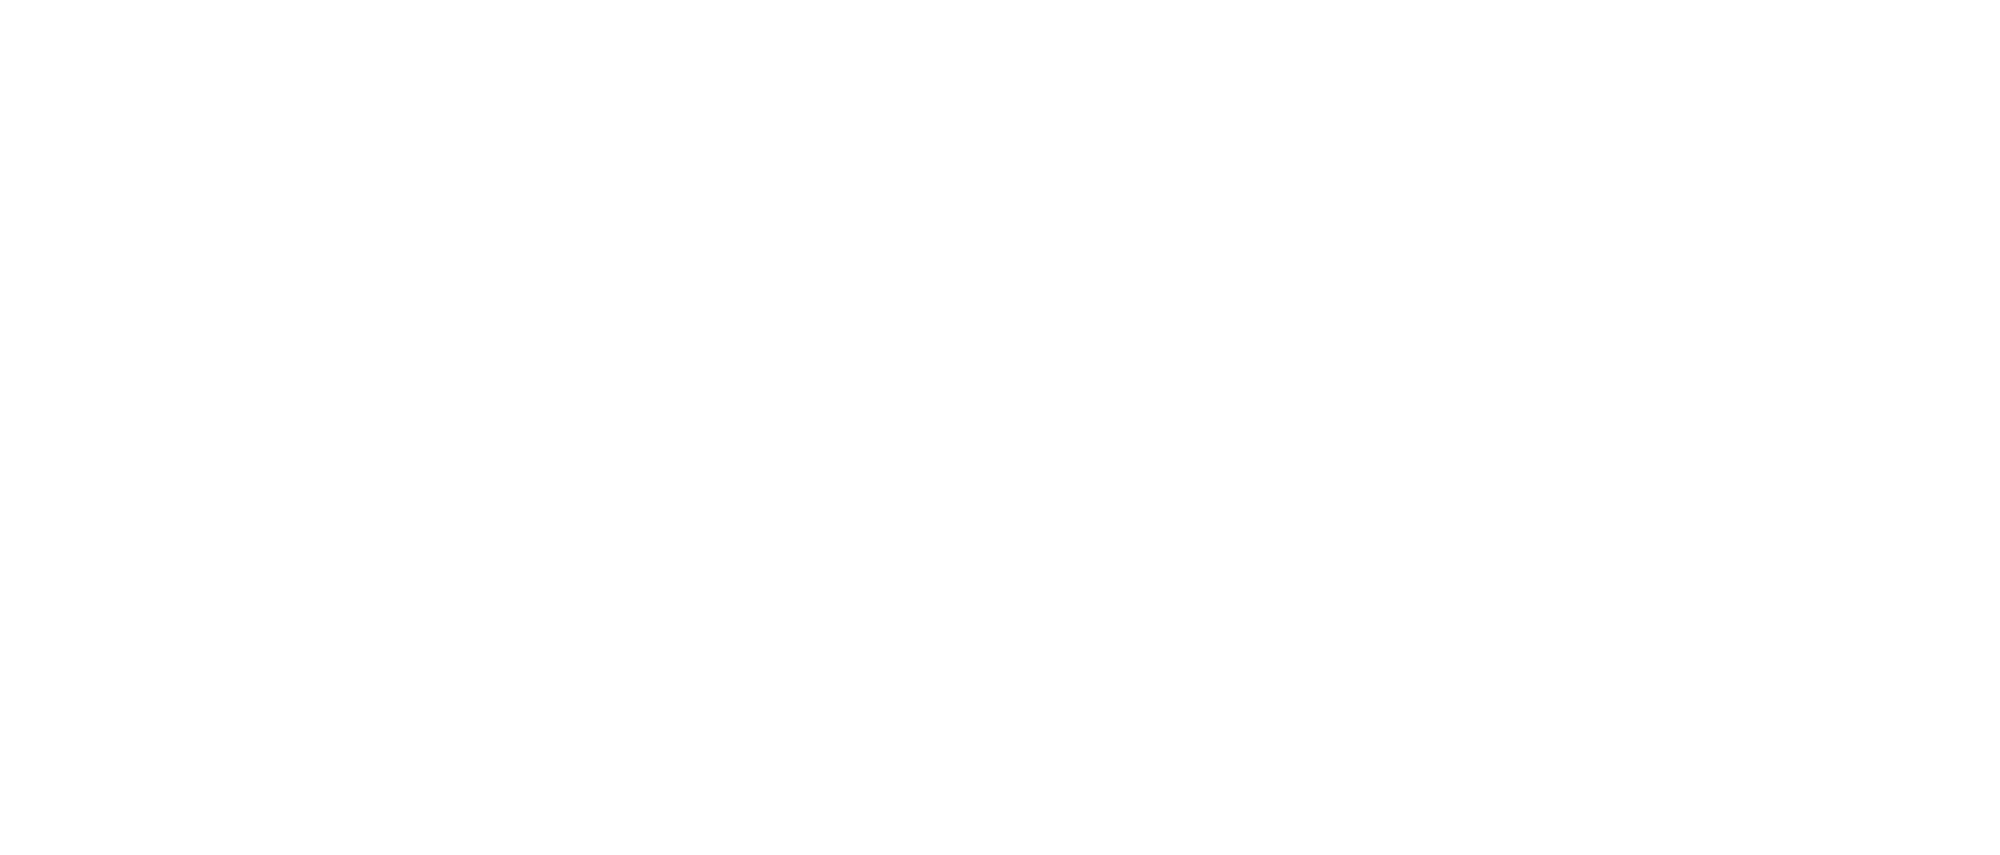 Sullivan_diversity-is-our-strength